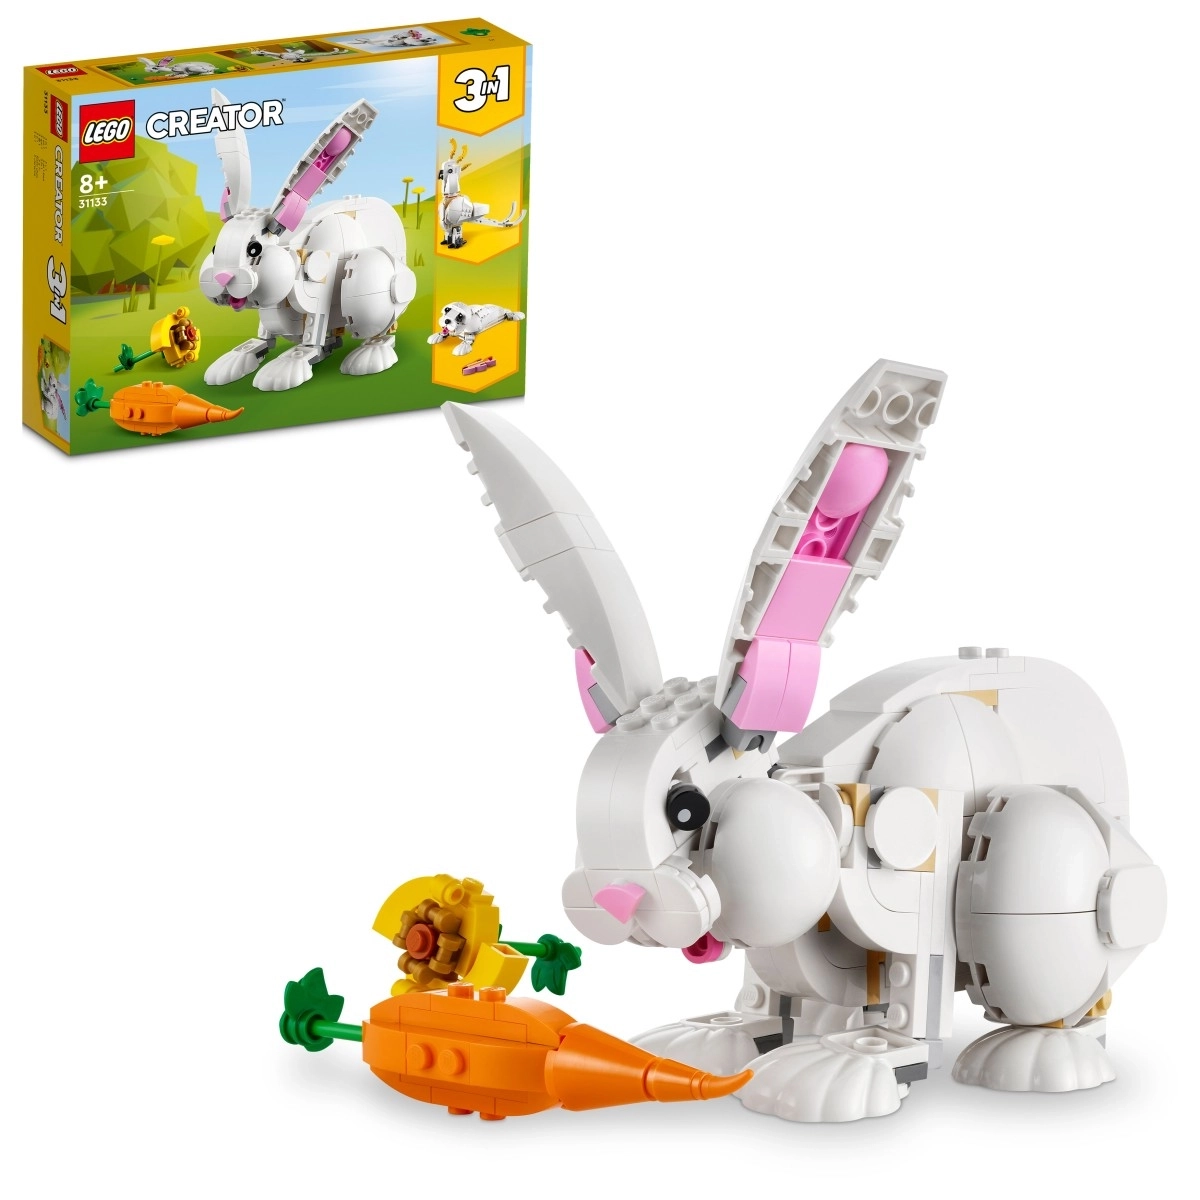 Rabbit　Pieces,　3in1　Toy　Set,　Creator　Multicolour,　Building　LEGO　258　White　8Y+